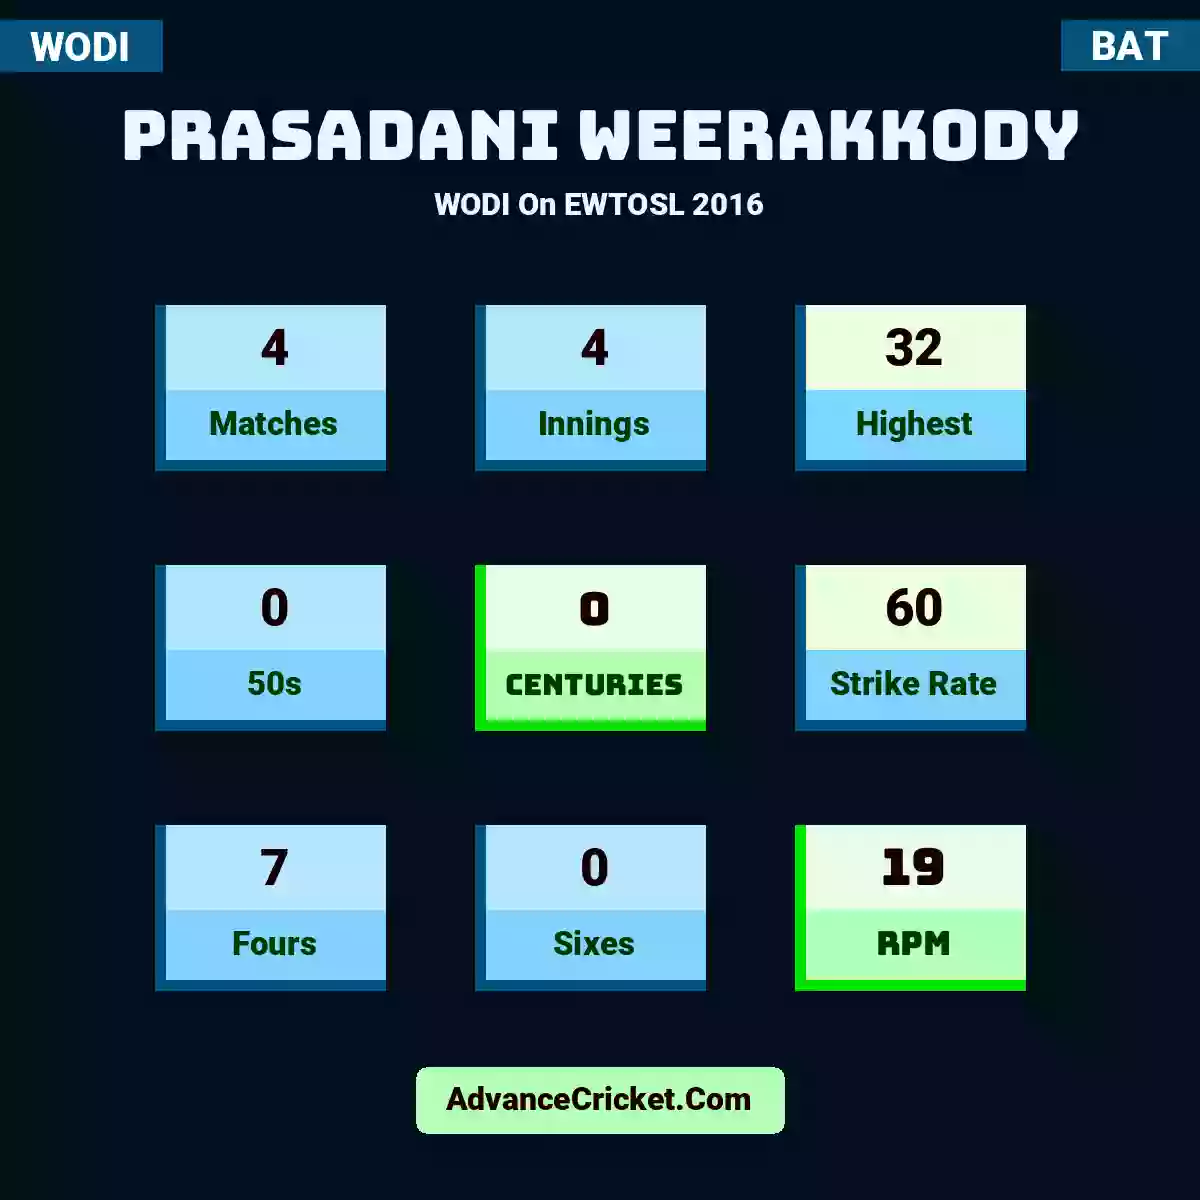 Prasadani Weerakkody WODI  On EWTOSL 2016, Prasadani Weerakkody played 4 matches, scored 32 runs as highest, 0 half-centuries, and 0 centuries, with a strike rate of 60. P.Weerakkody hit 7 fours and 0 sixes, with an RPM of 19.